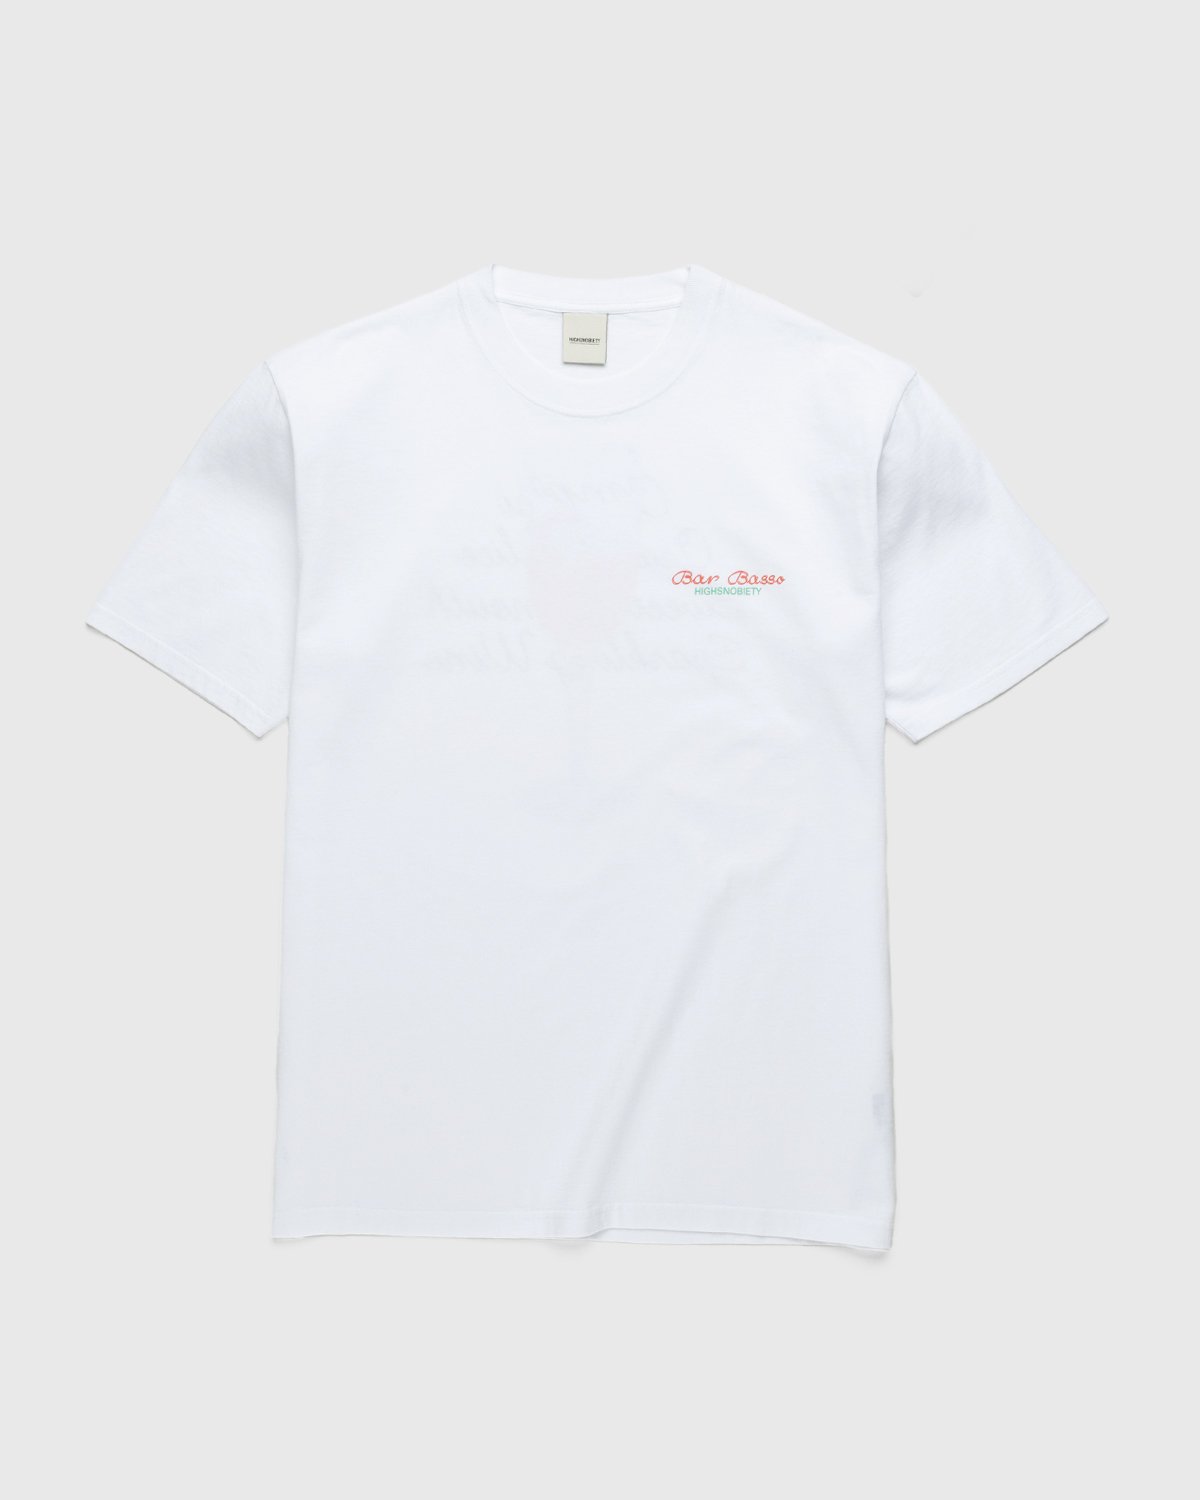 Bar Basso x Highsnobiety - Recipe T-Shirt White - Clothing - White - Image 2